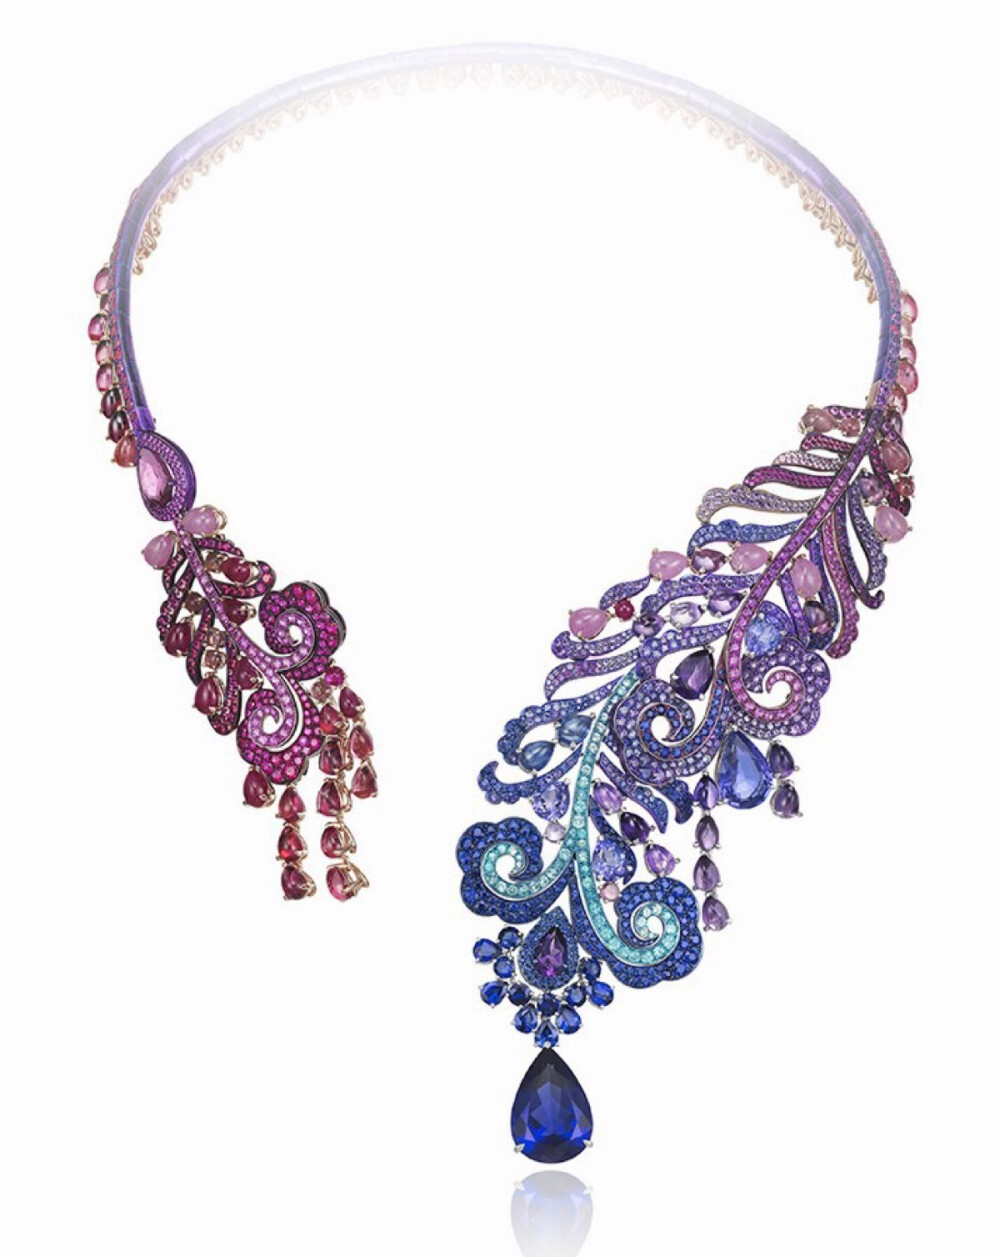 High Jewellery 项链，by Chopard
挂坠为一颗14克拉的梨形切割坦桑石，项链镶嵌紫晶、碧玺、红宝石、梨形蓝宝石，底座采用白金和钛金属制作。